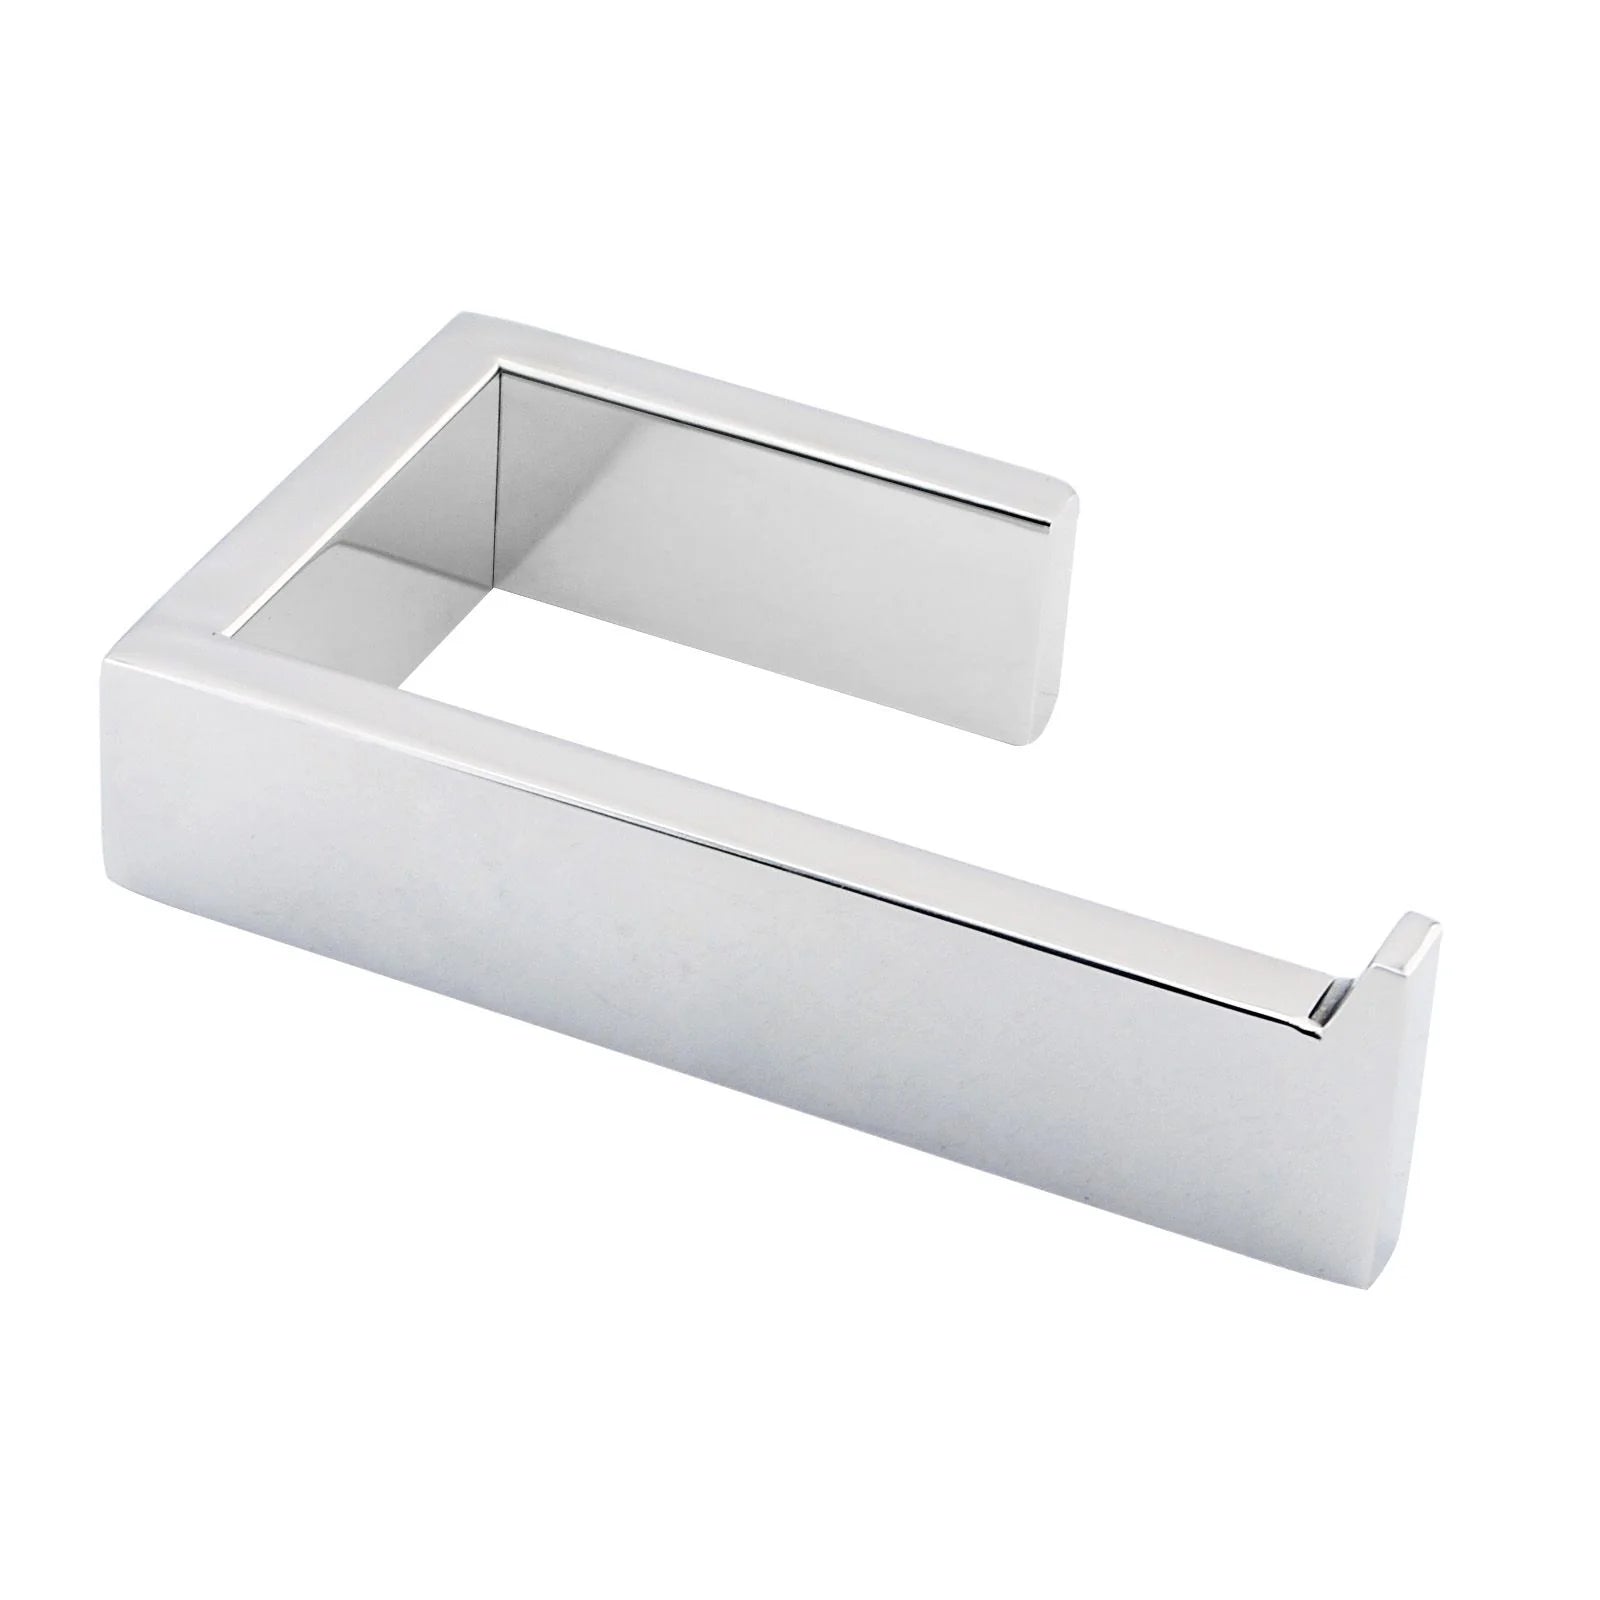 Ivano Series Toilet Paper Holder: Stylish, Sturdy Bathroom Essential-Chrome-CH6408-TR